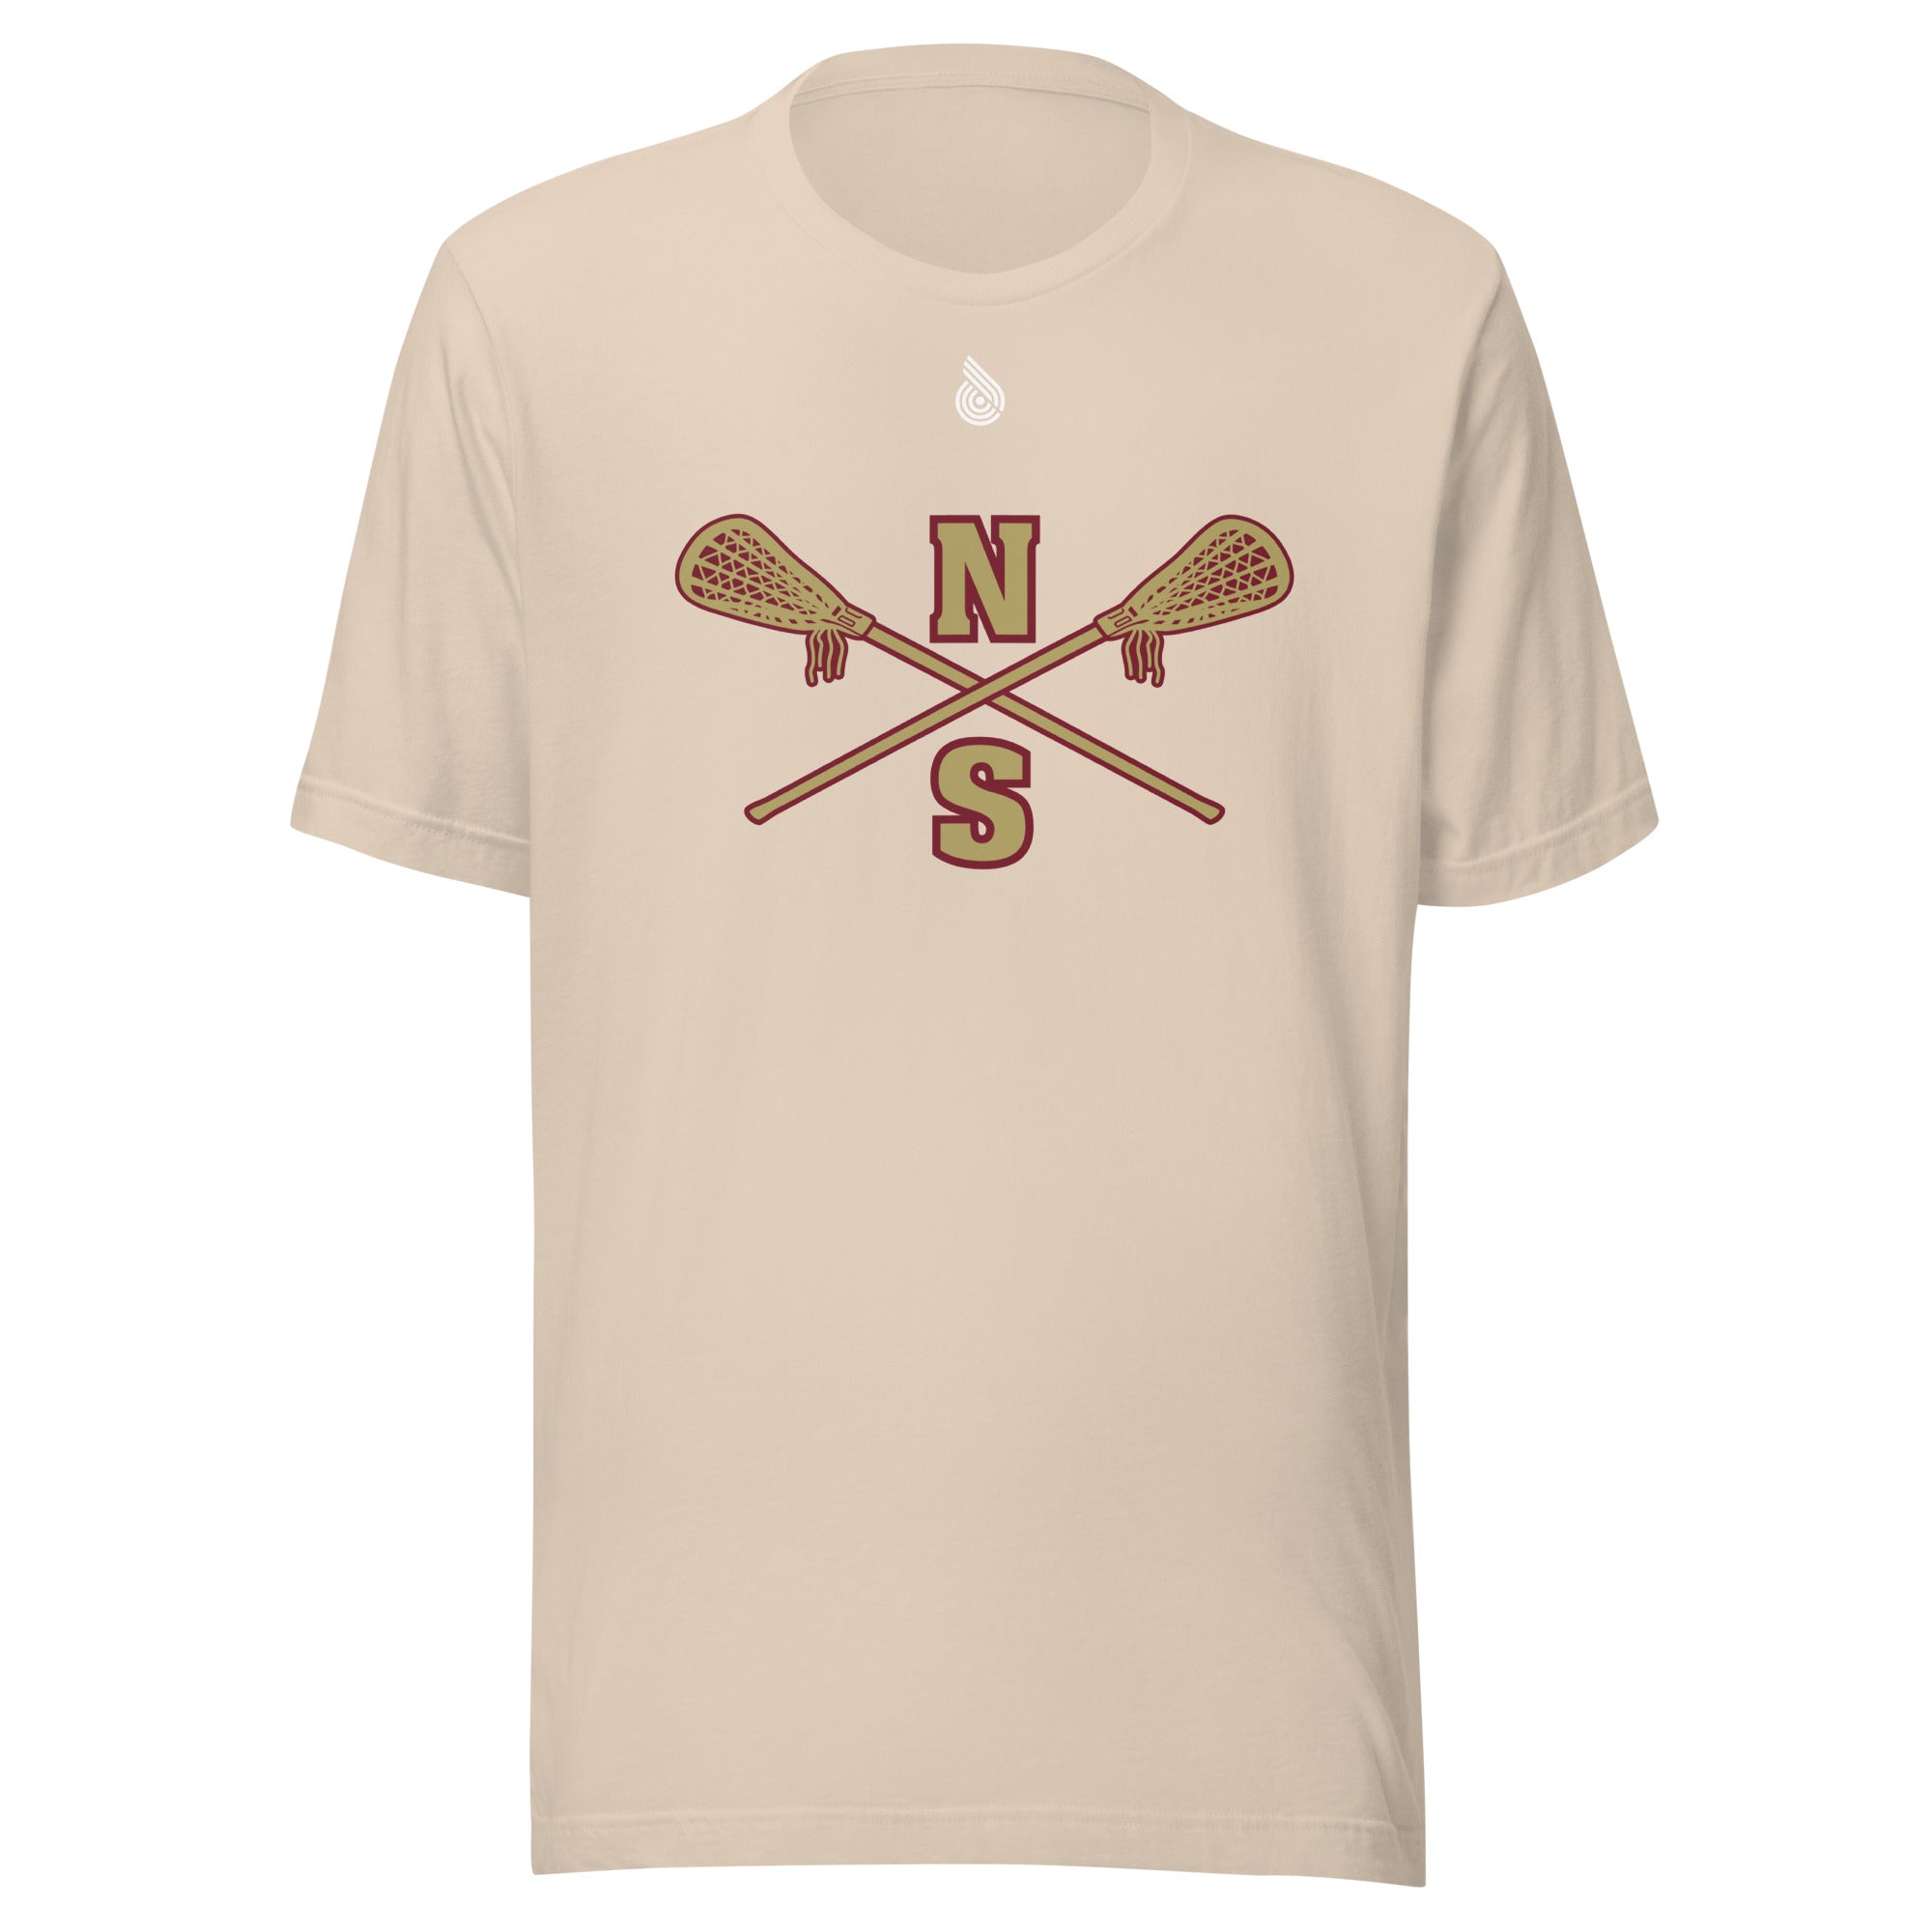 N-S Unisex t-shirt (Boys Logo)